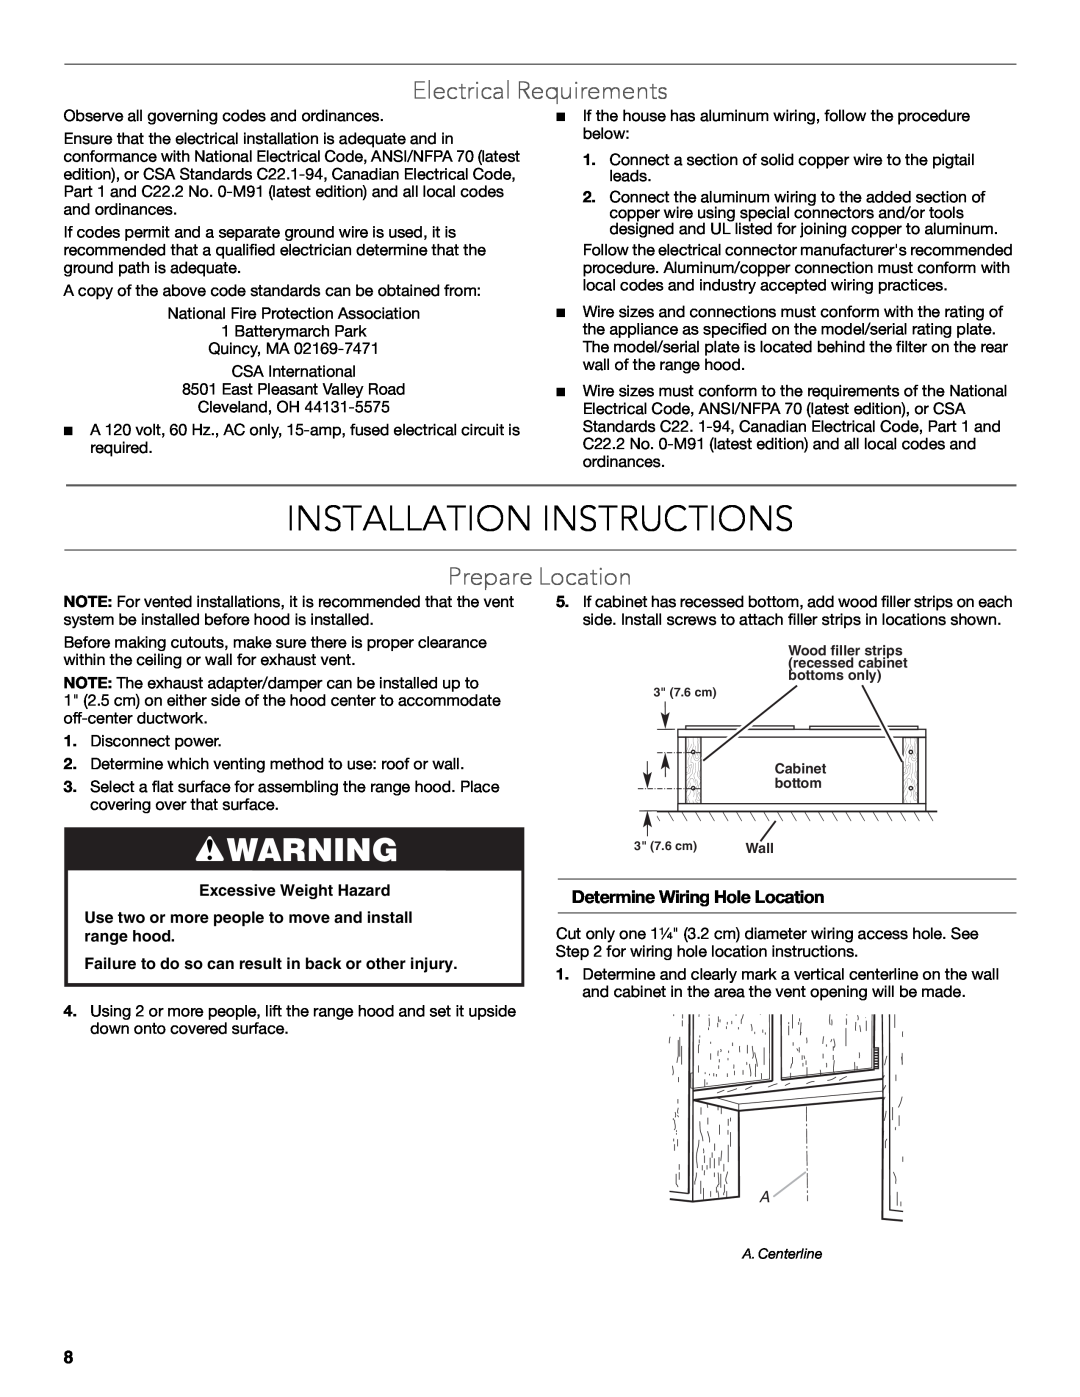 KitchenAid LI3ZGC/W10320581E Installation Instructions, Electrical Requirements, Prepare Location, Excessive Weight Hazard 